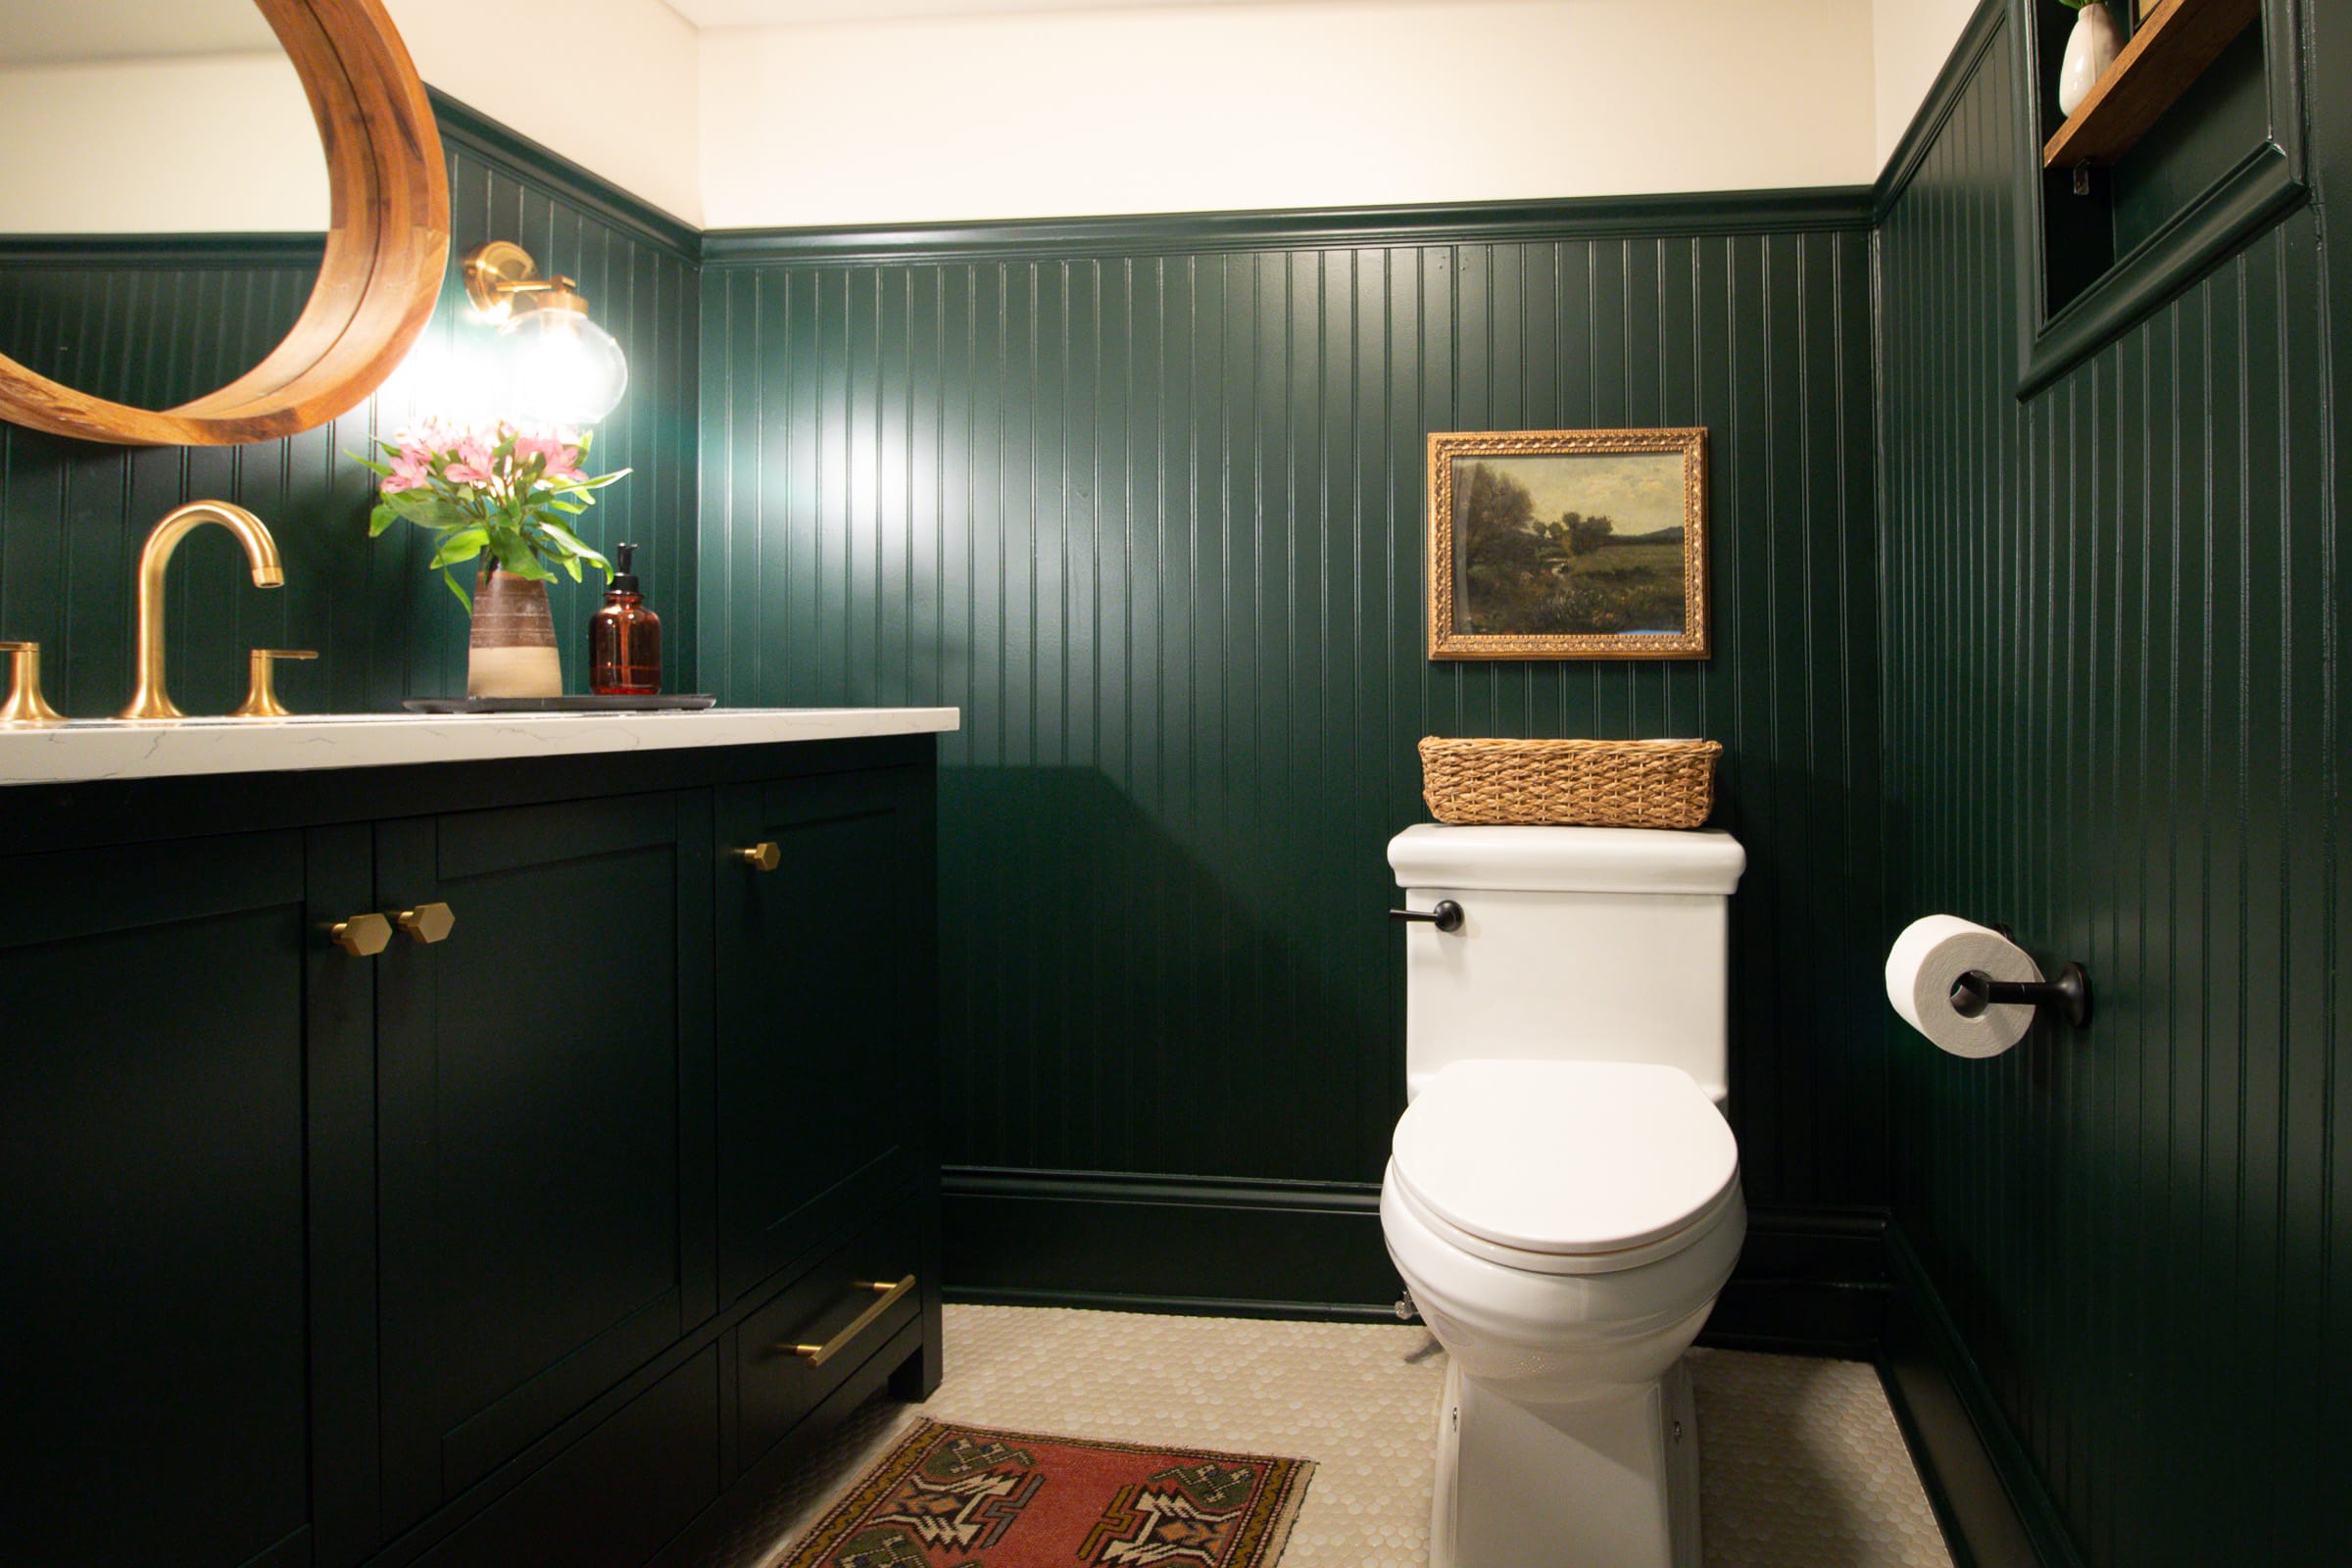 Our dark green bathroom now